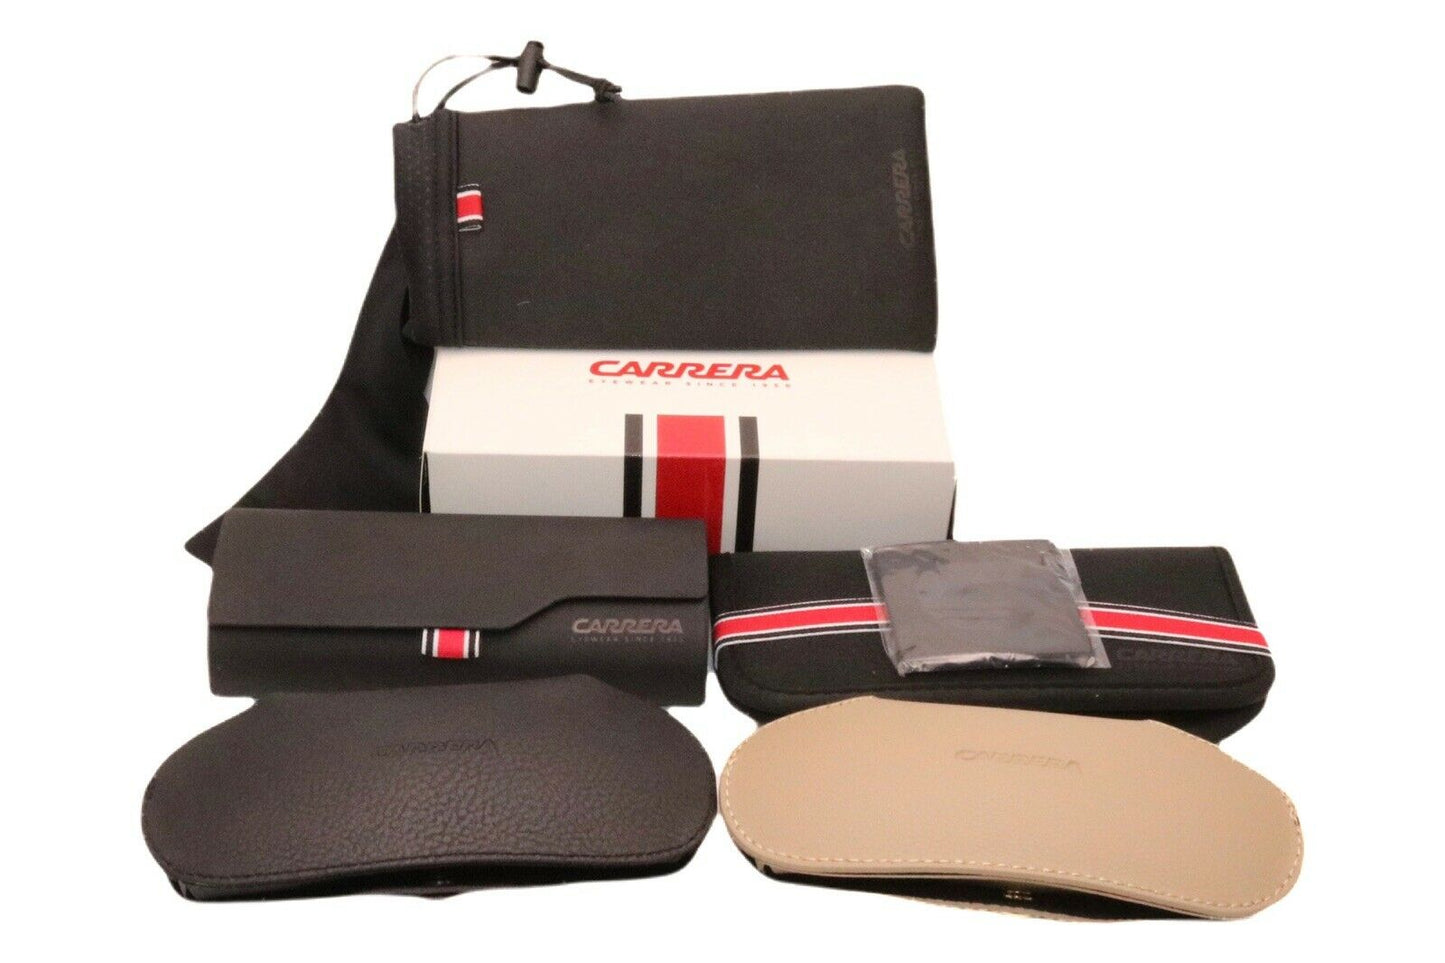 Carrera CARRERA-0086-HVN-54 54mm New Eyeglasses